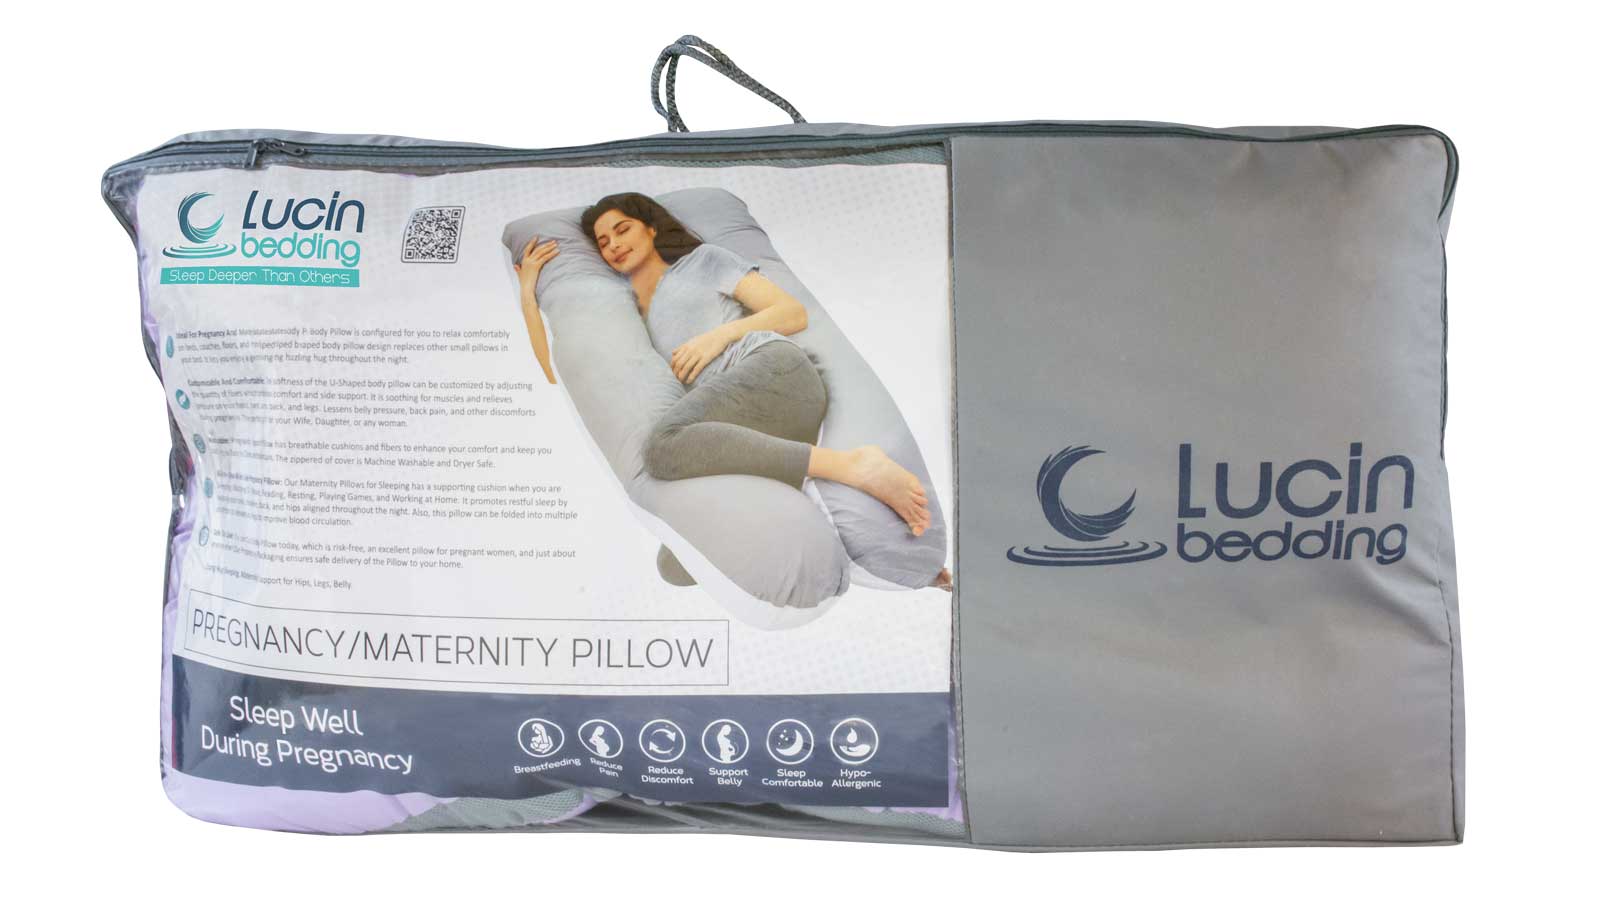 Lucin Pregnancy/Maternity Pillow